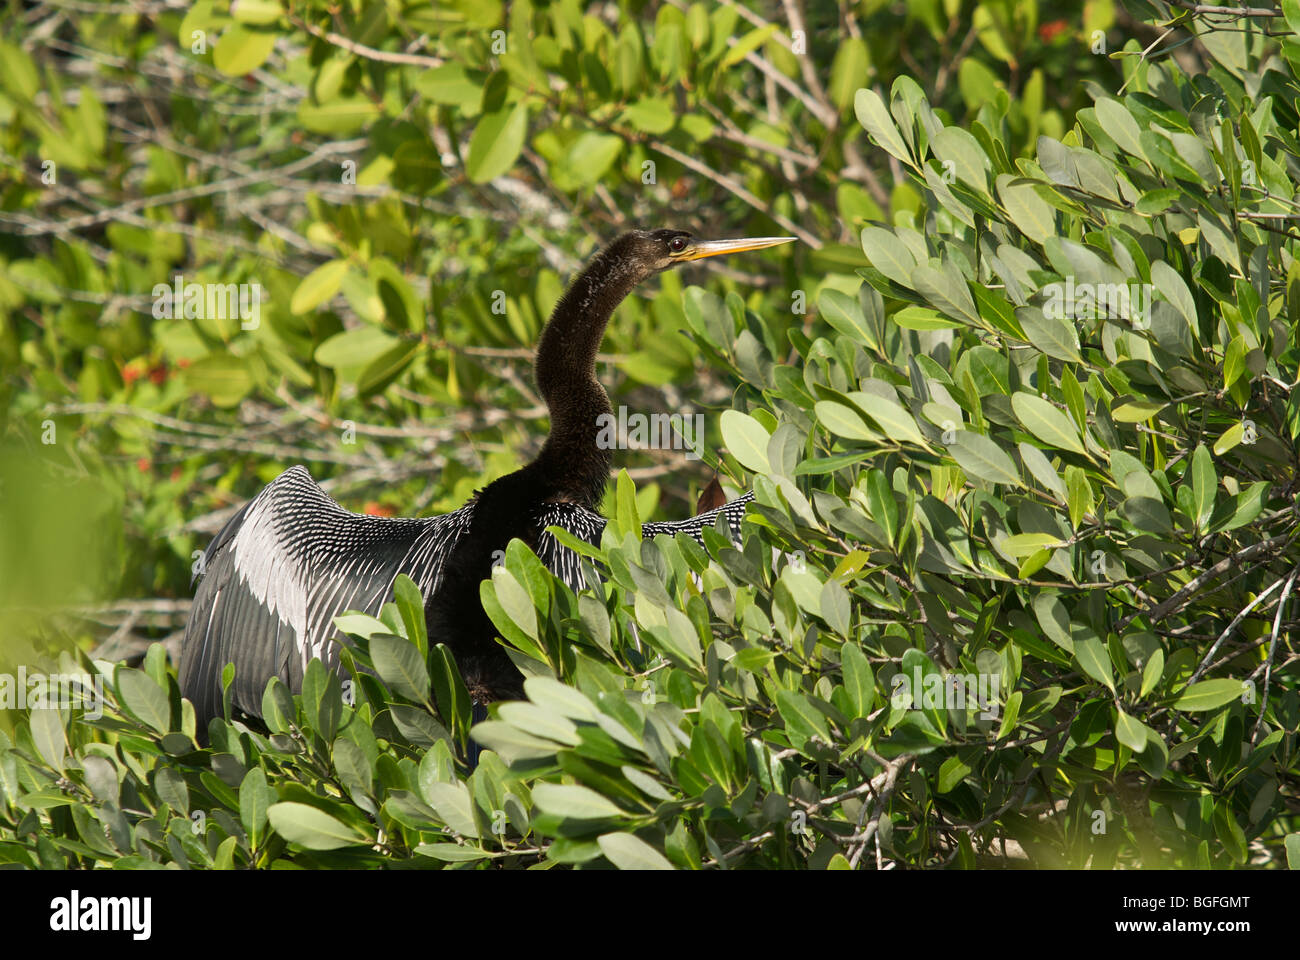 Merritt Island anhinga sunning itself in Florida foliage Stock Photo